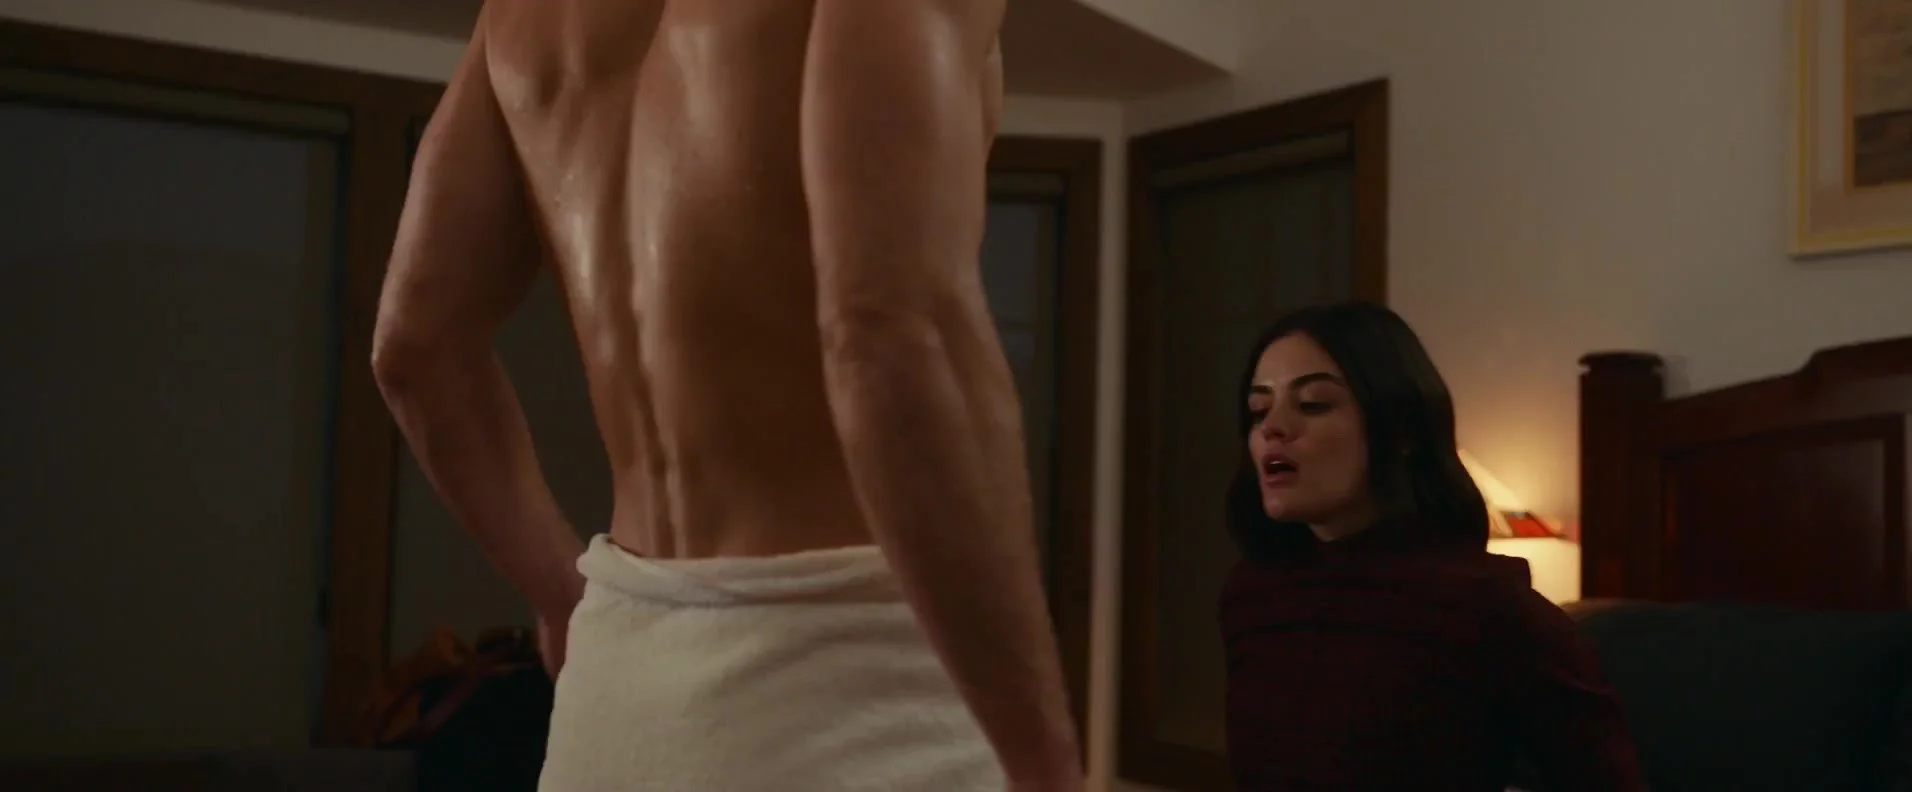 CFNM sex scene in a movie pic image